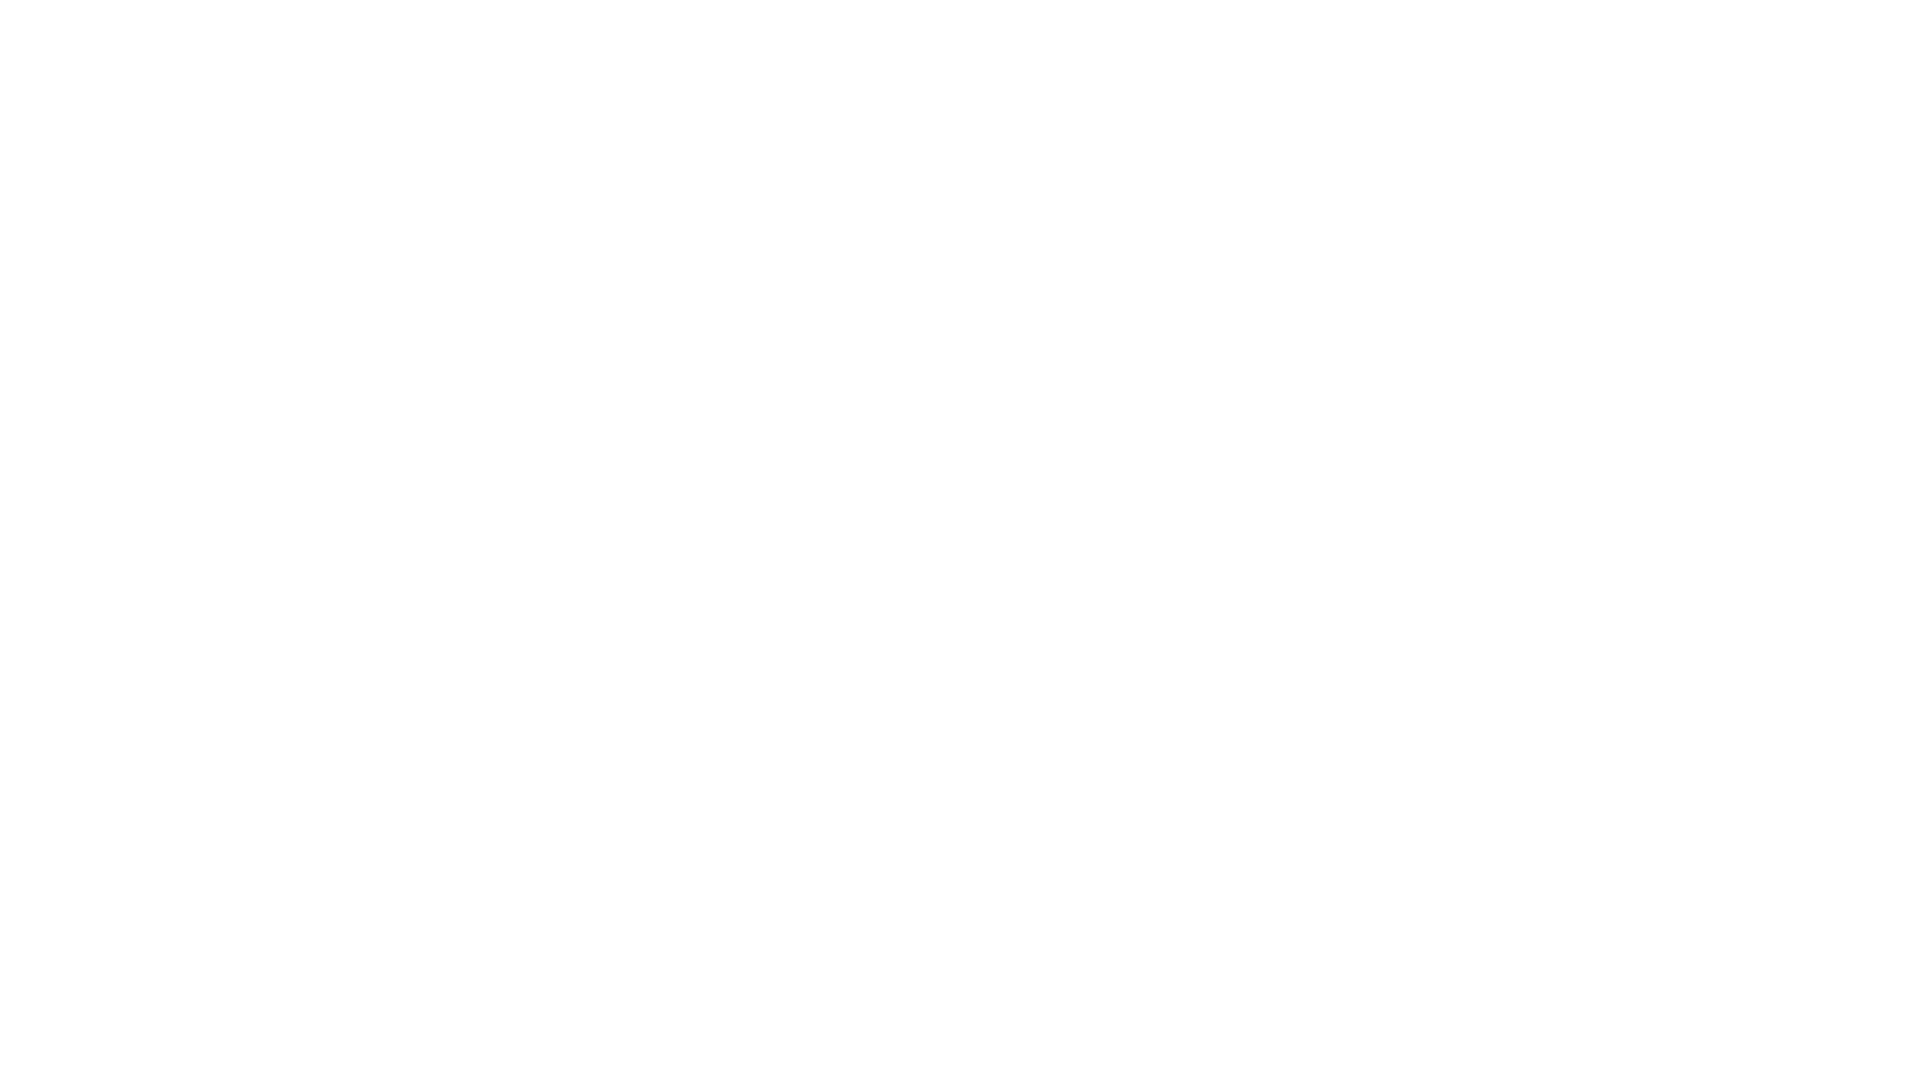 Bridge the gap